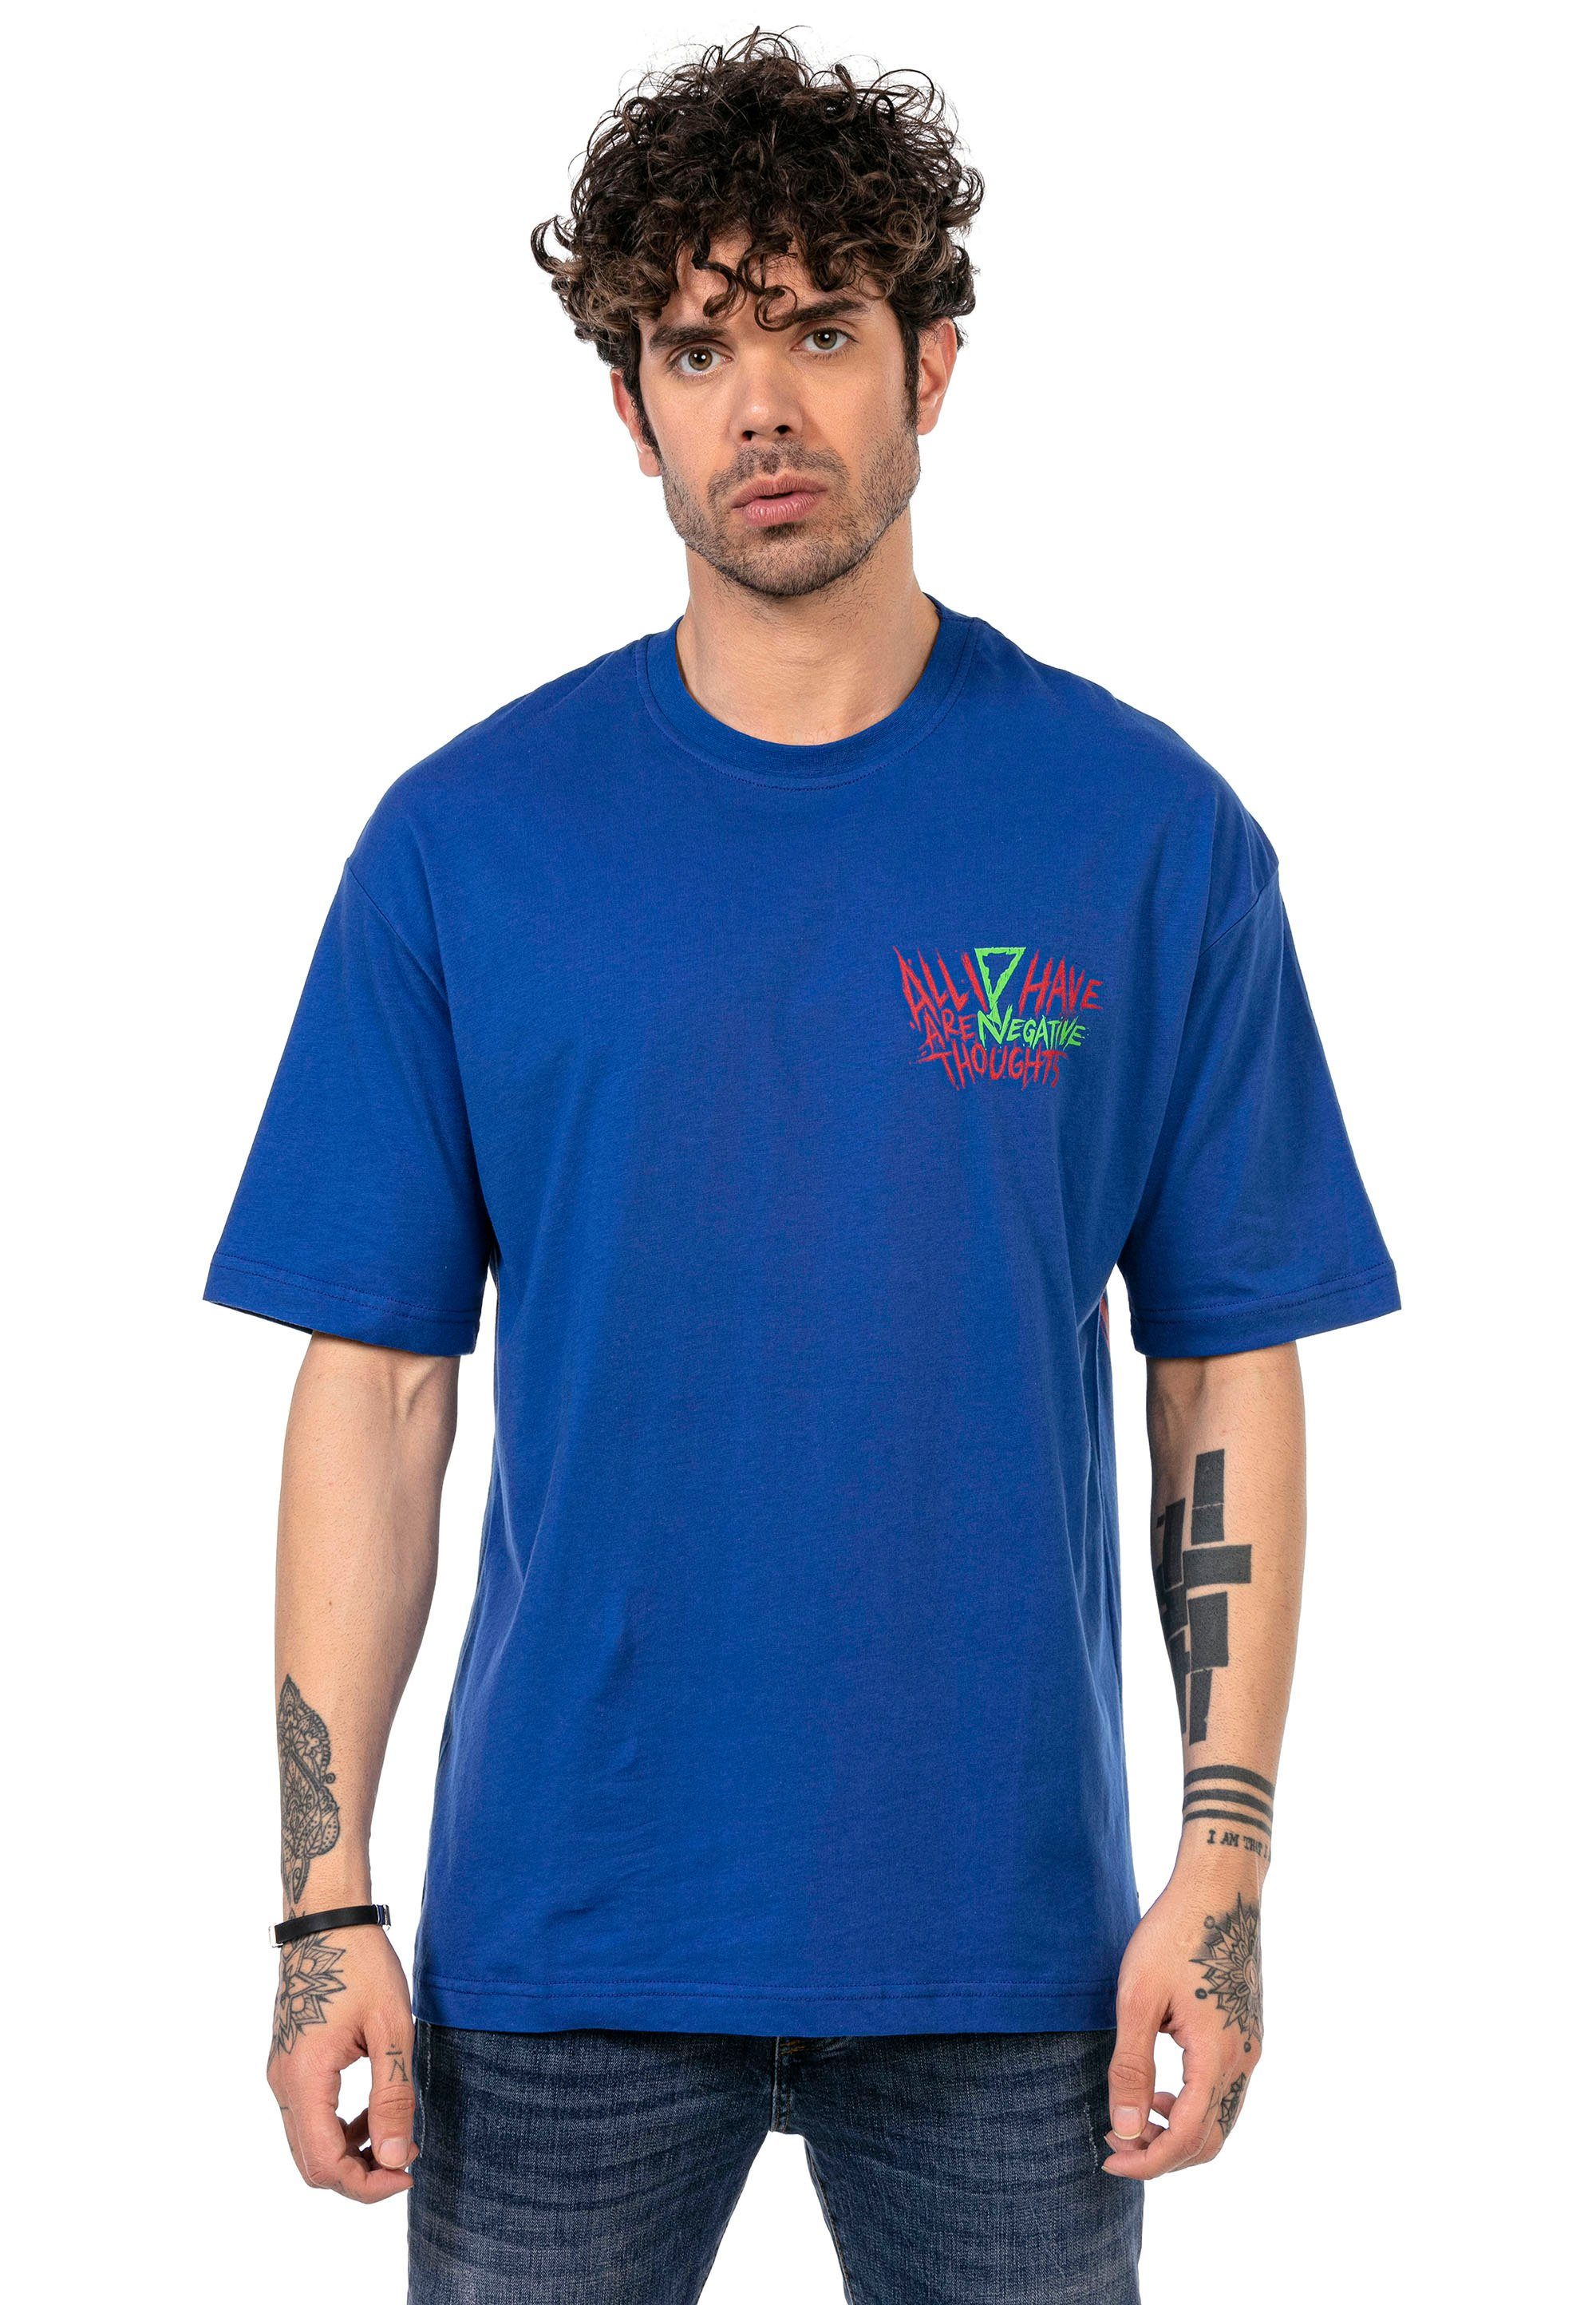 T-Shirt blau Keynes großem RedBridge Joker-Motiv mit Milton